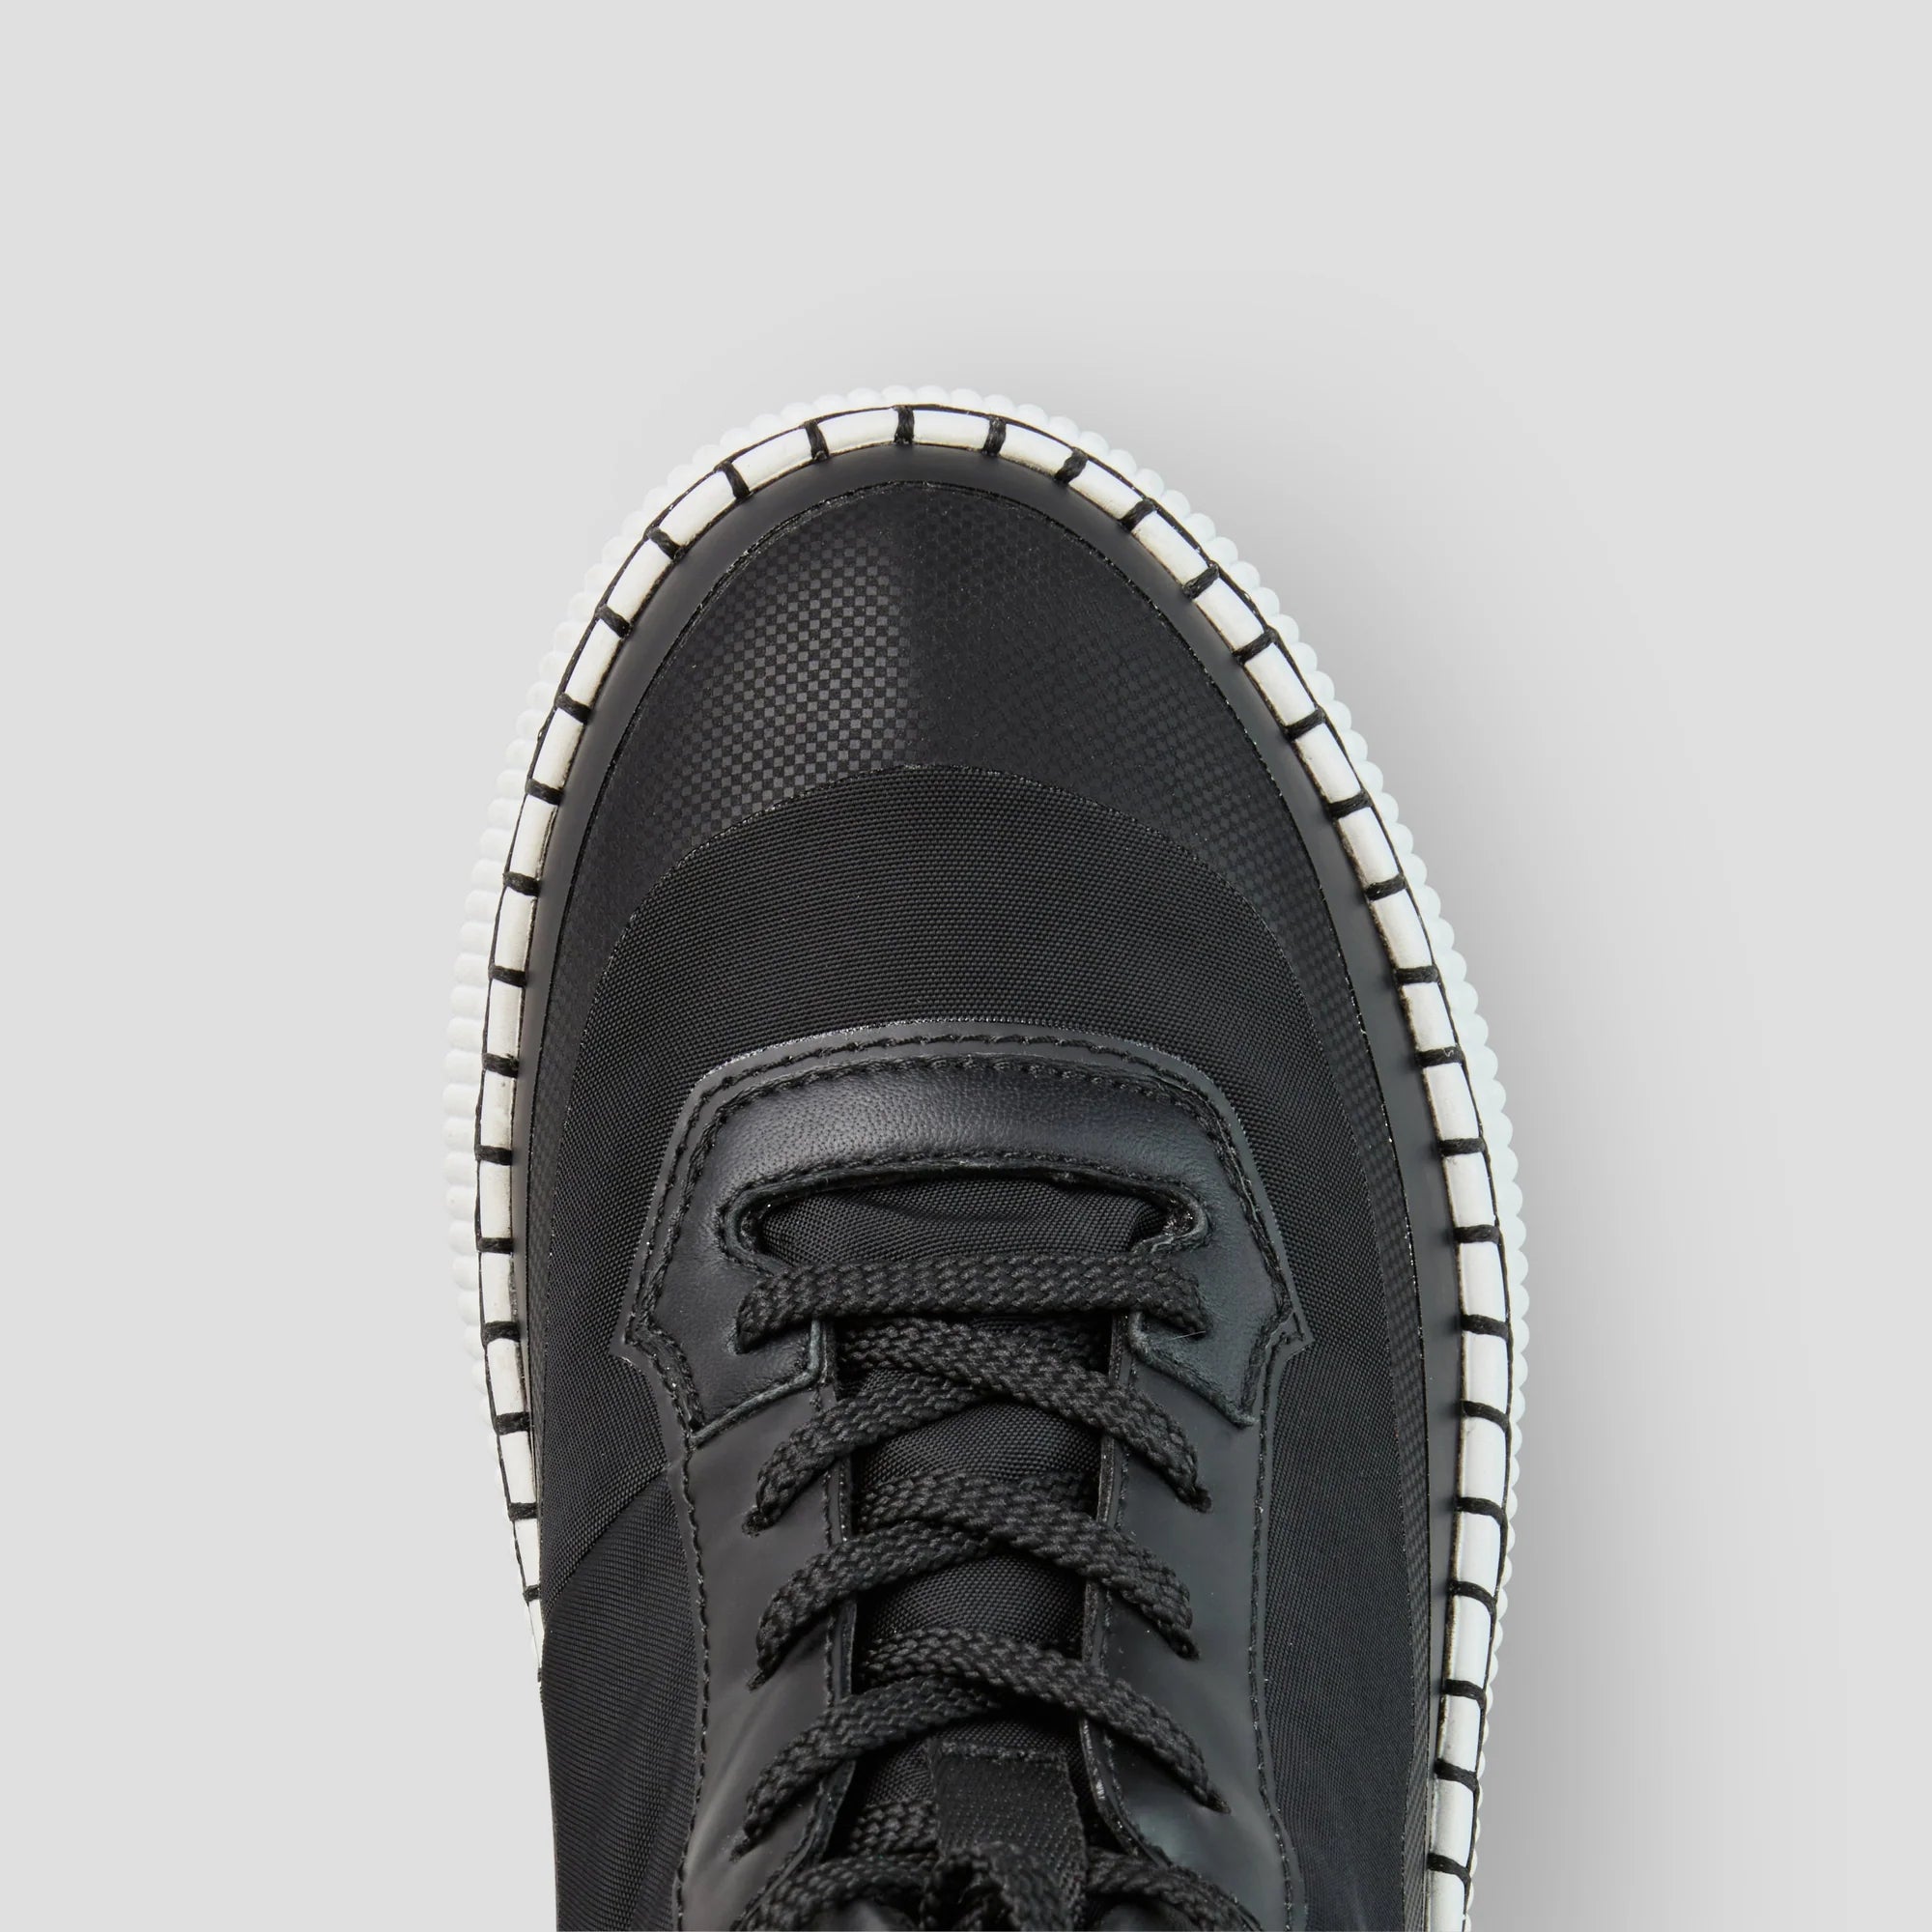 COUGAR SHOES SAVANT - Luxmotion Nylon and Leather Waterproof Sneaker - Boutique Bubbles